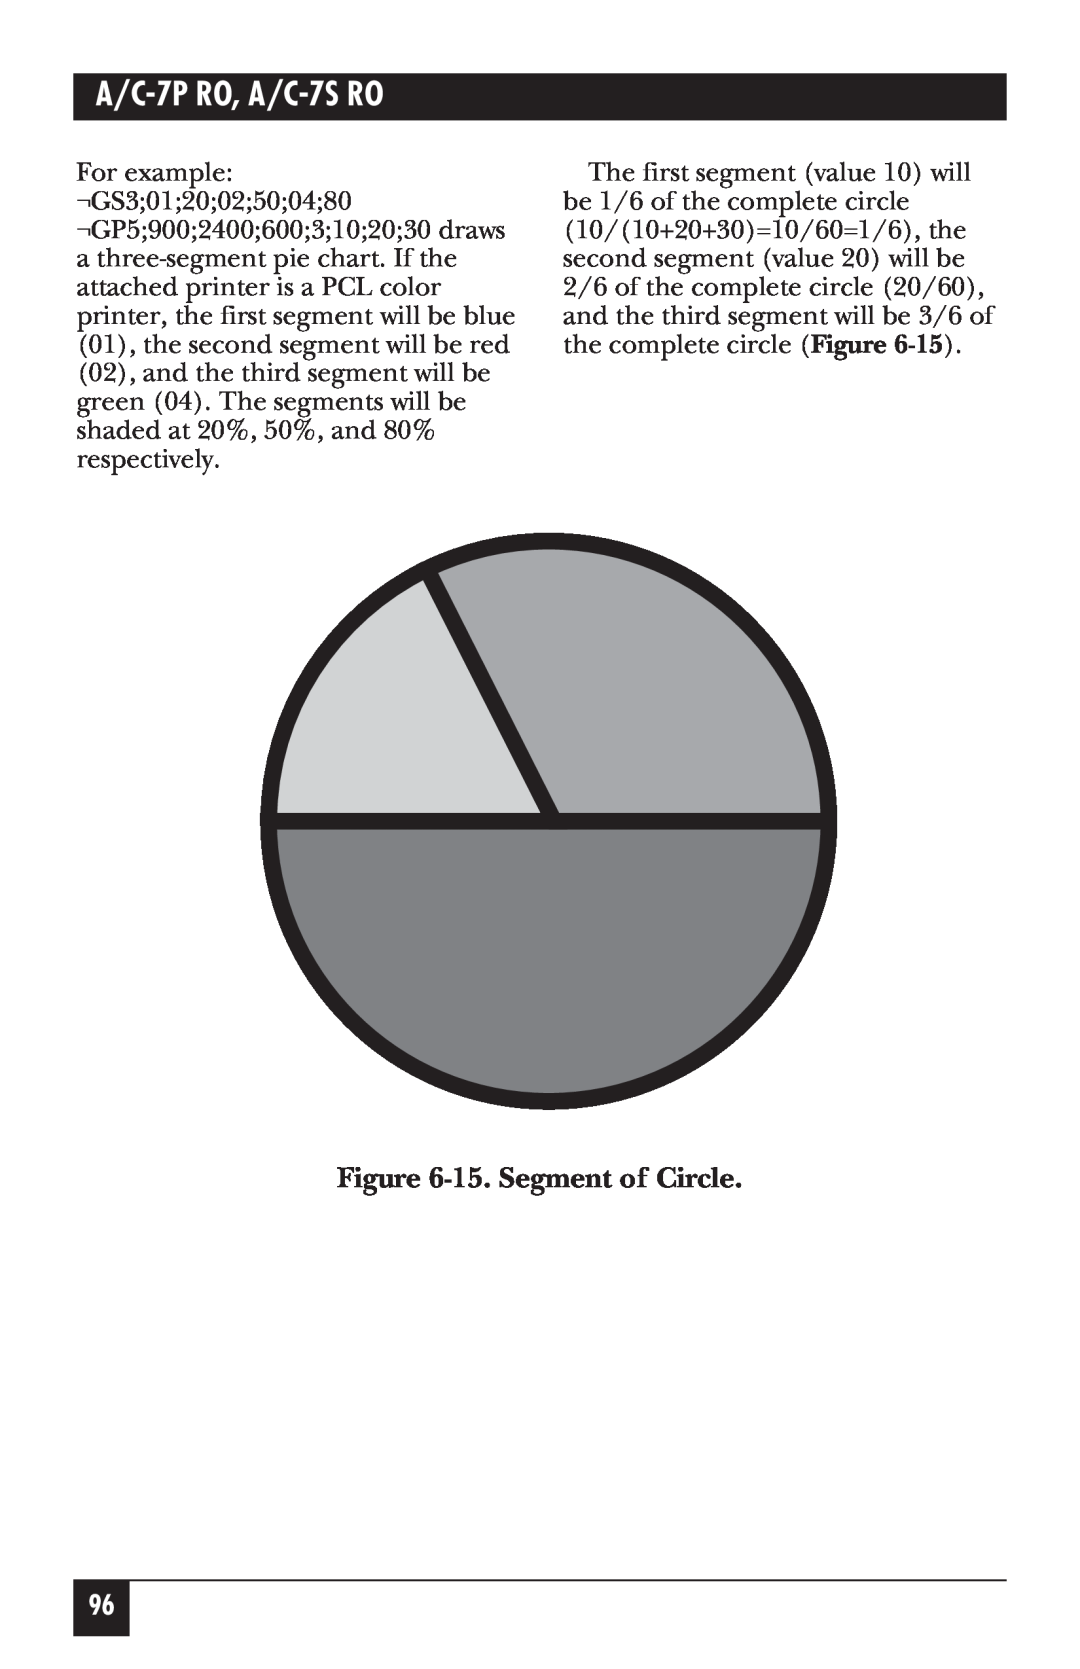 Black Box manual 15. Segment of Circle, A/C-7P RO, A/C-7S RO 